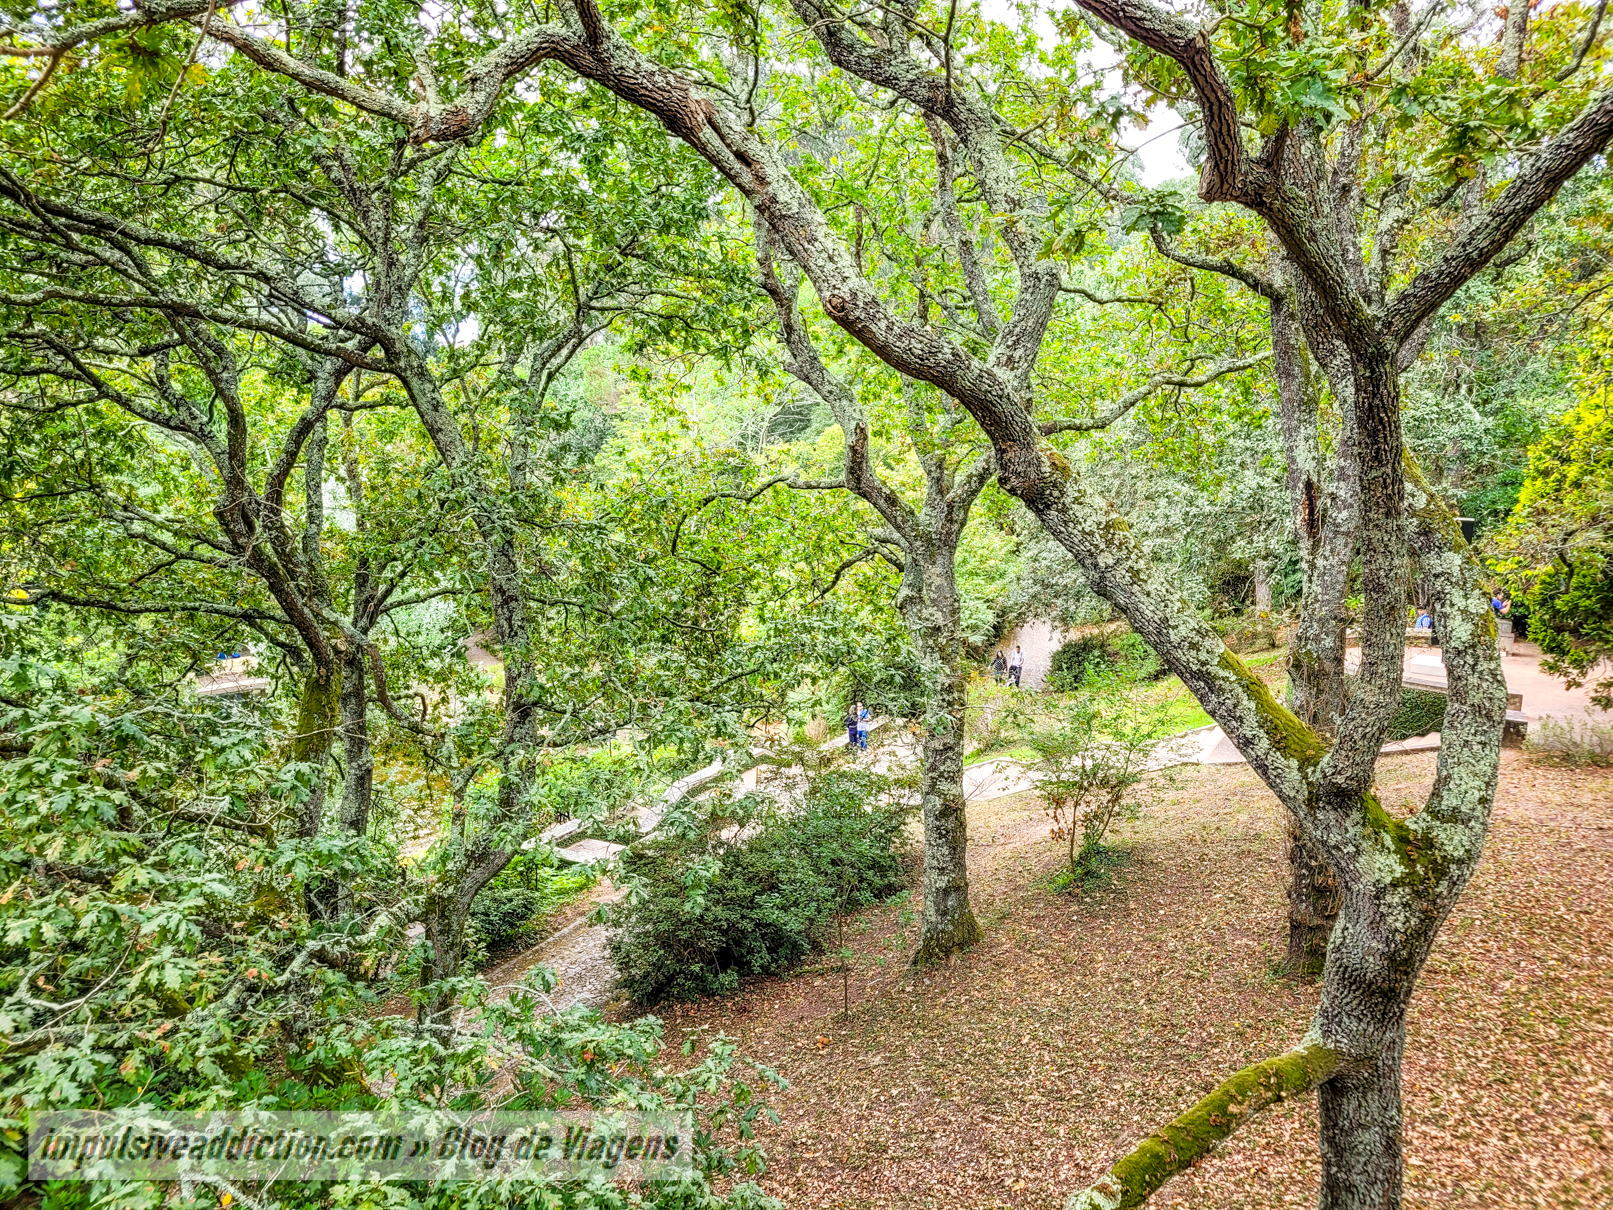 TreeTop Walk at Serralves Park